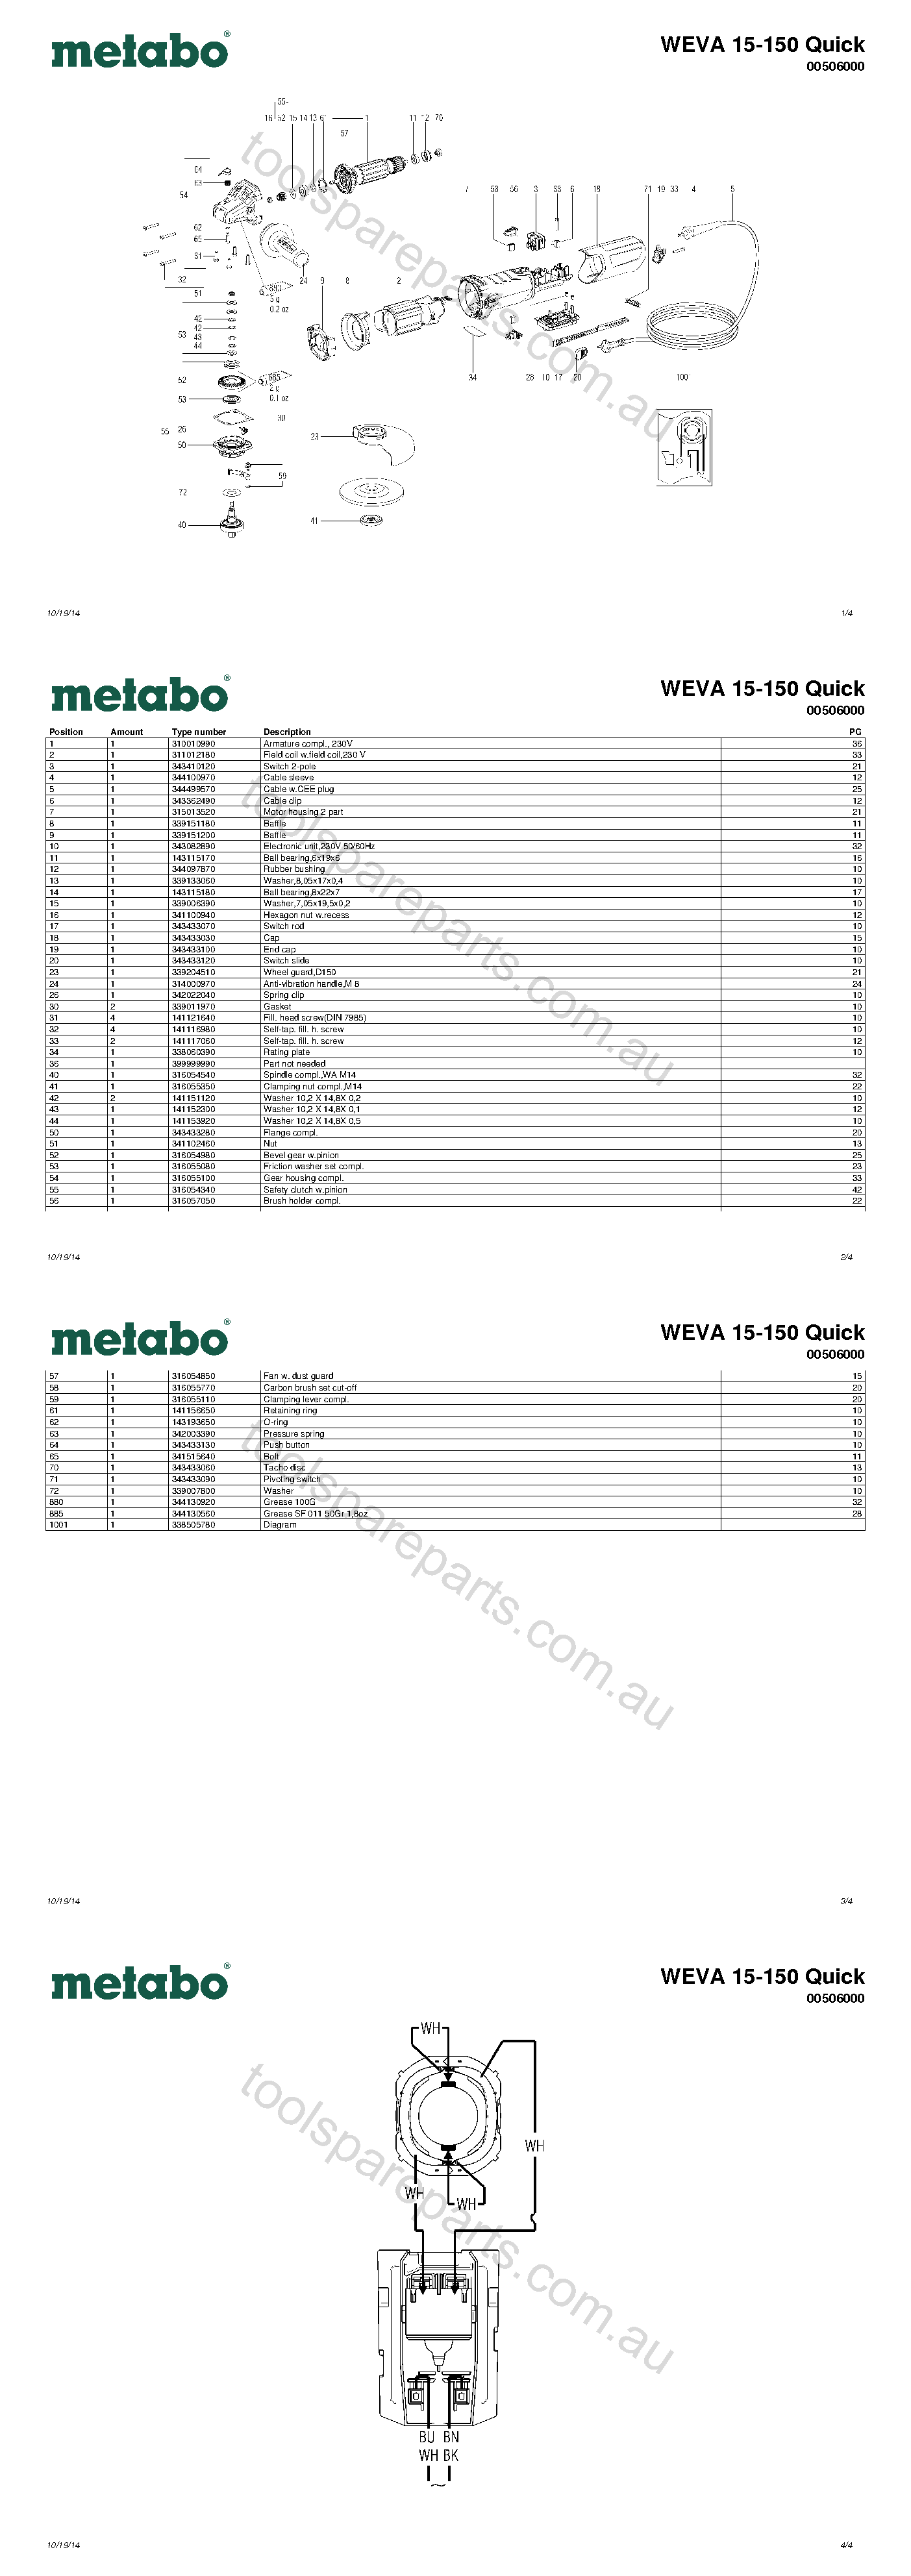 Metabo WEVA 15-150 Quick 00506000  Diagram 1